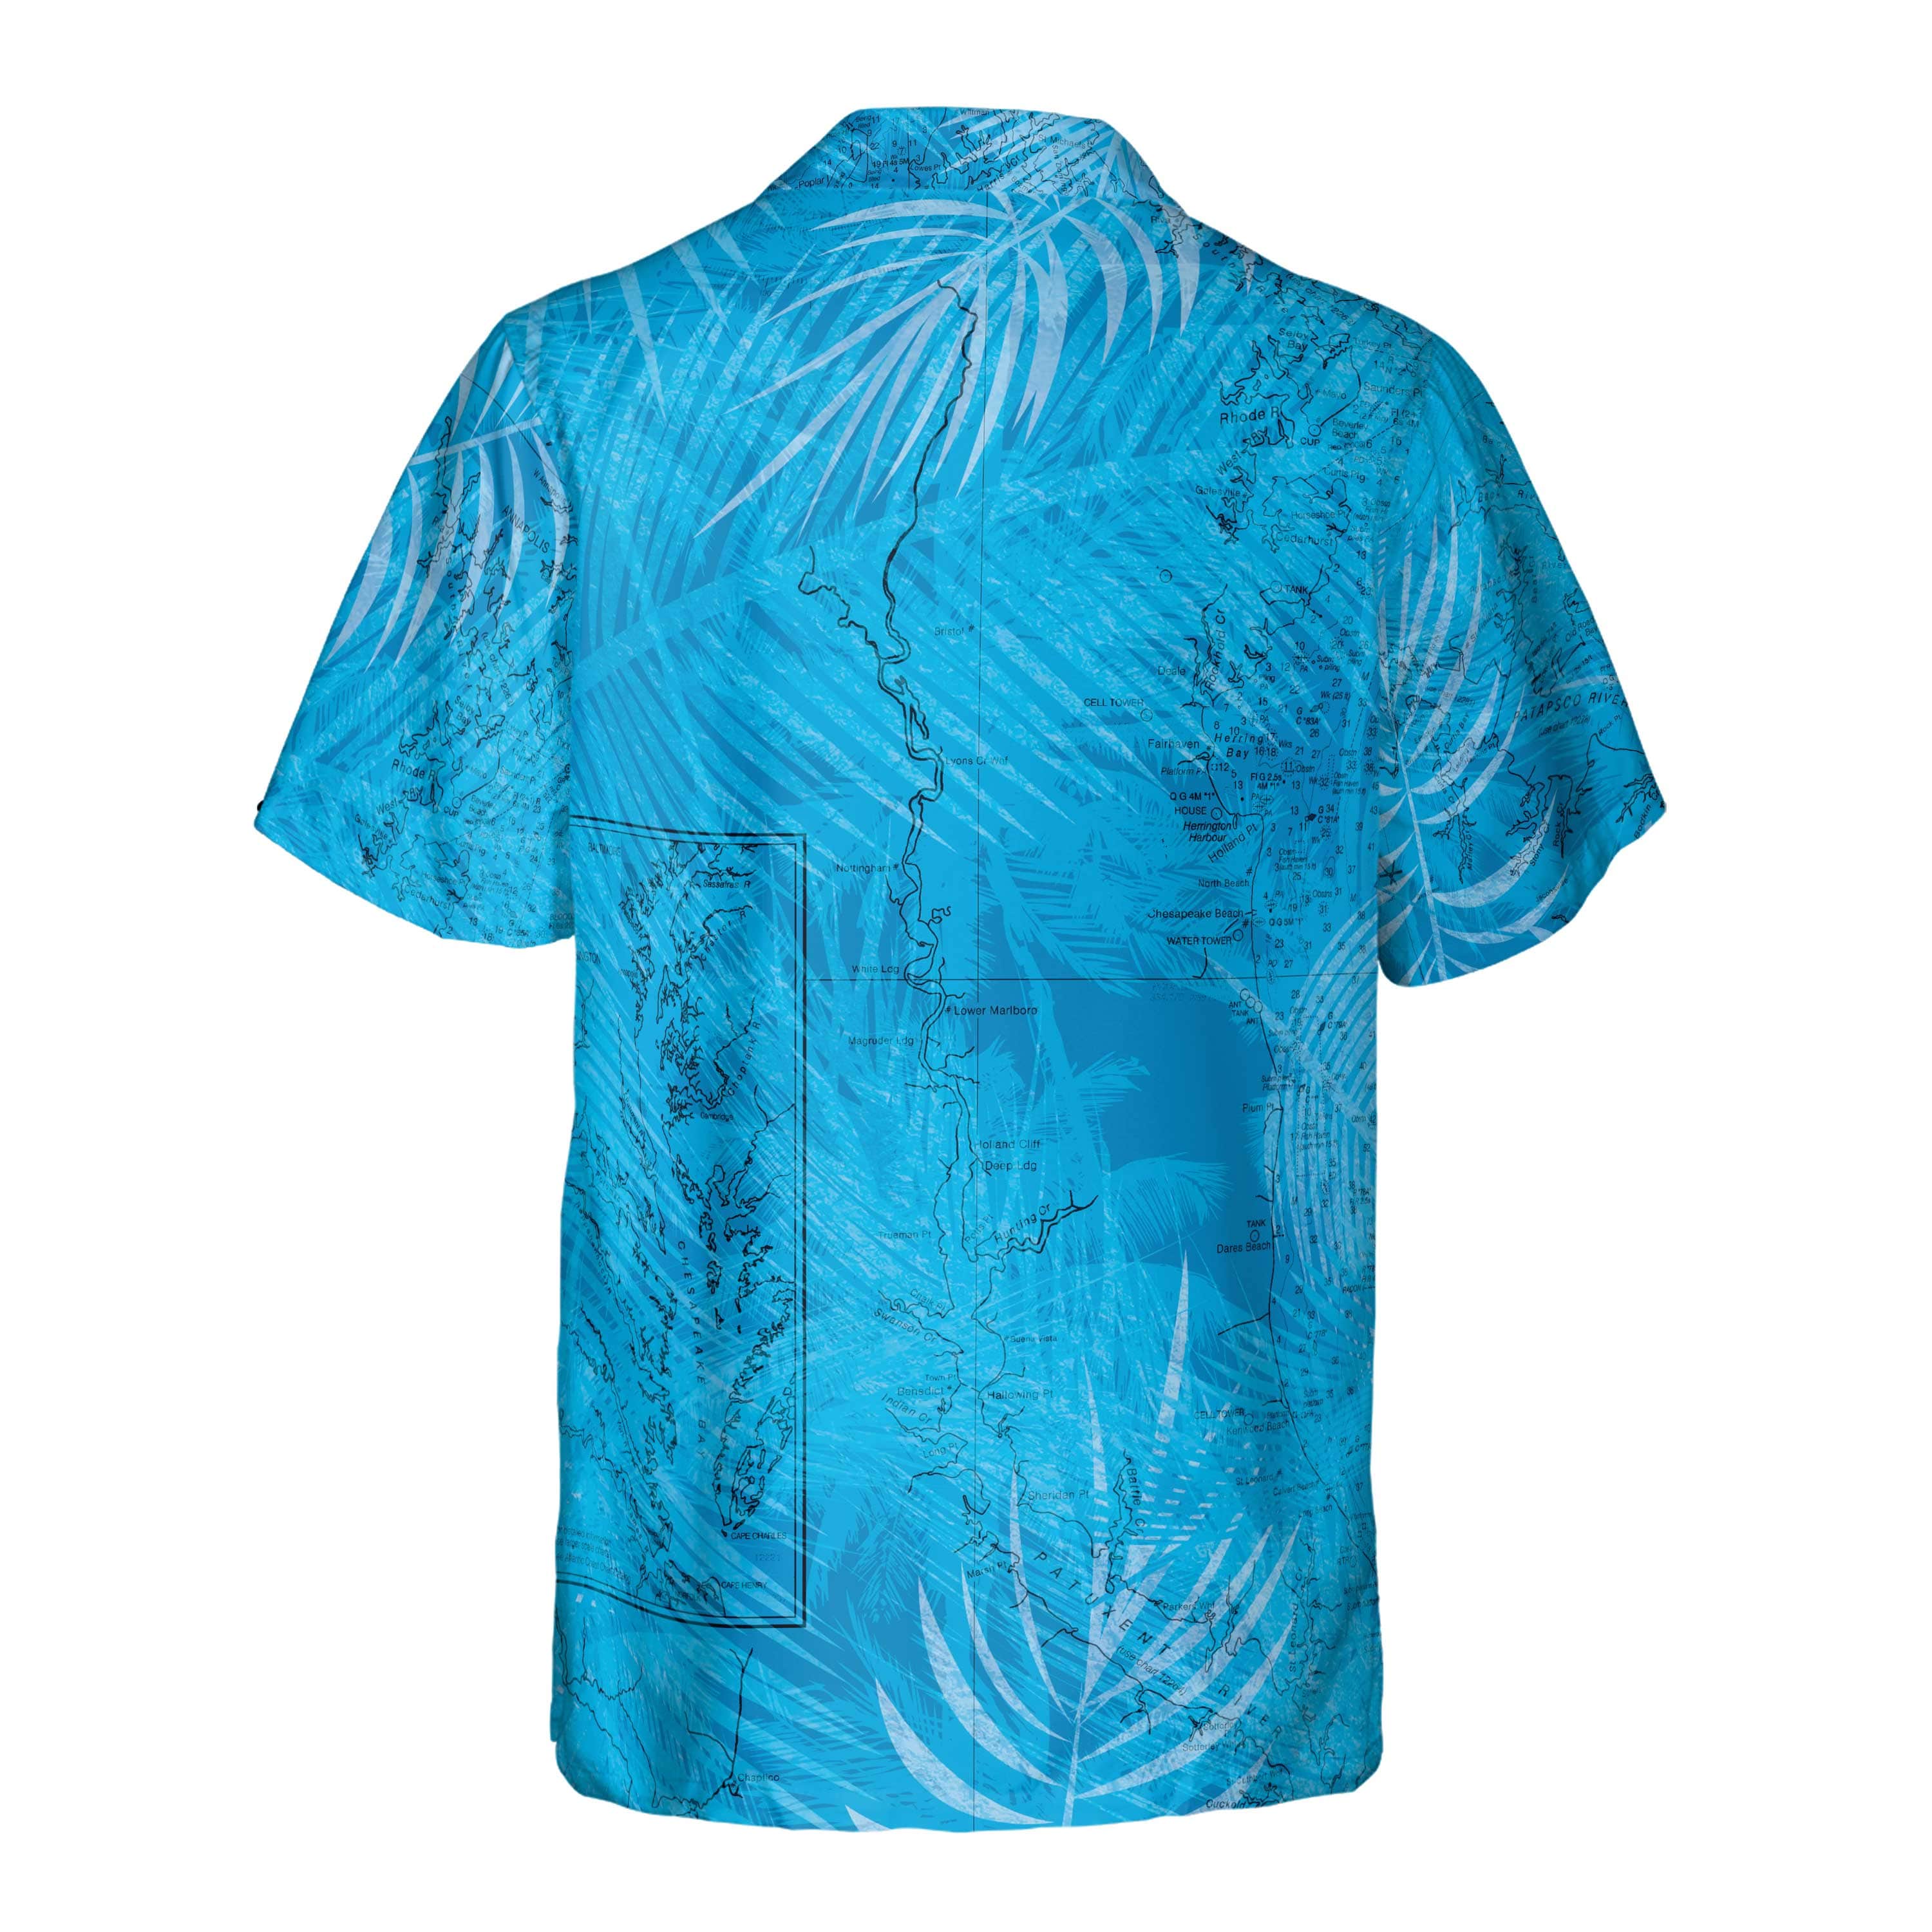 The Chesapeake Bay Blue Ferns Pocket Shirt